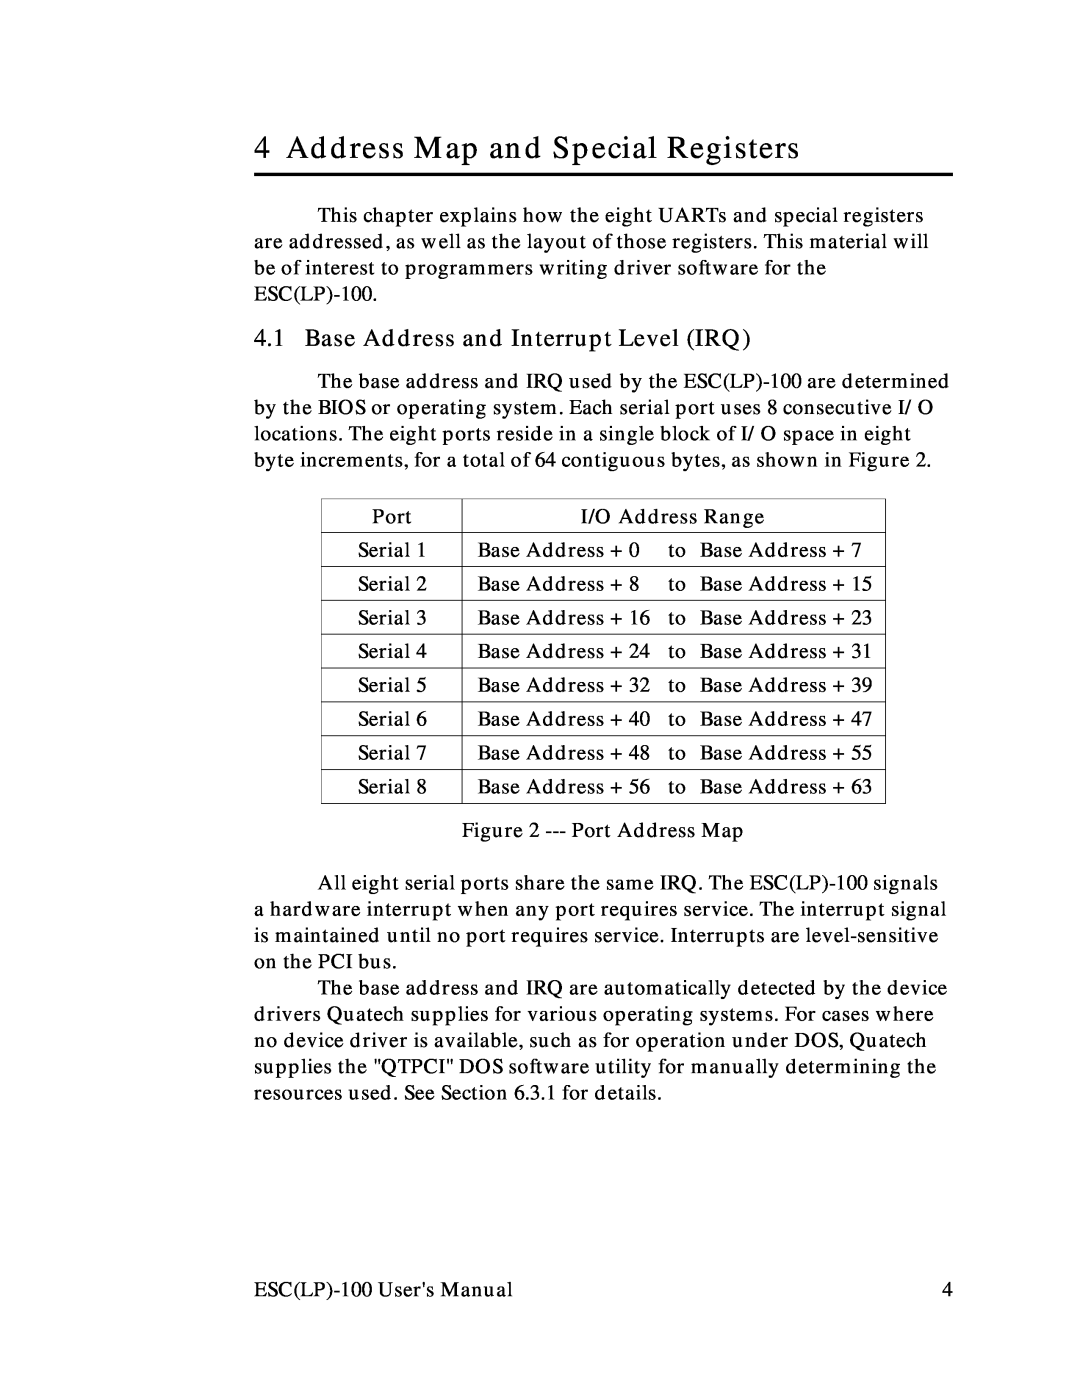 Quatech RS-232 user manual Base Address and Interrupt Level IRQ, Port, I/O Address Range, Address Map and Special Registers 